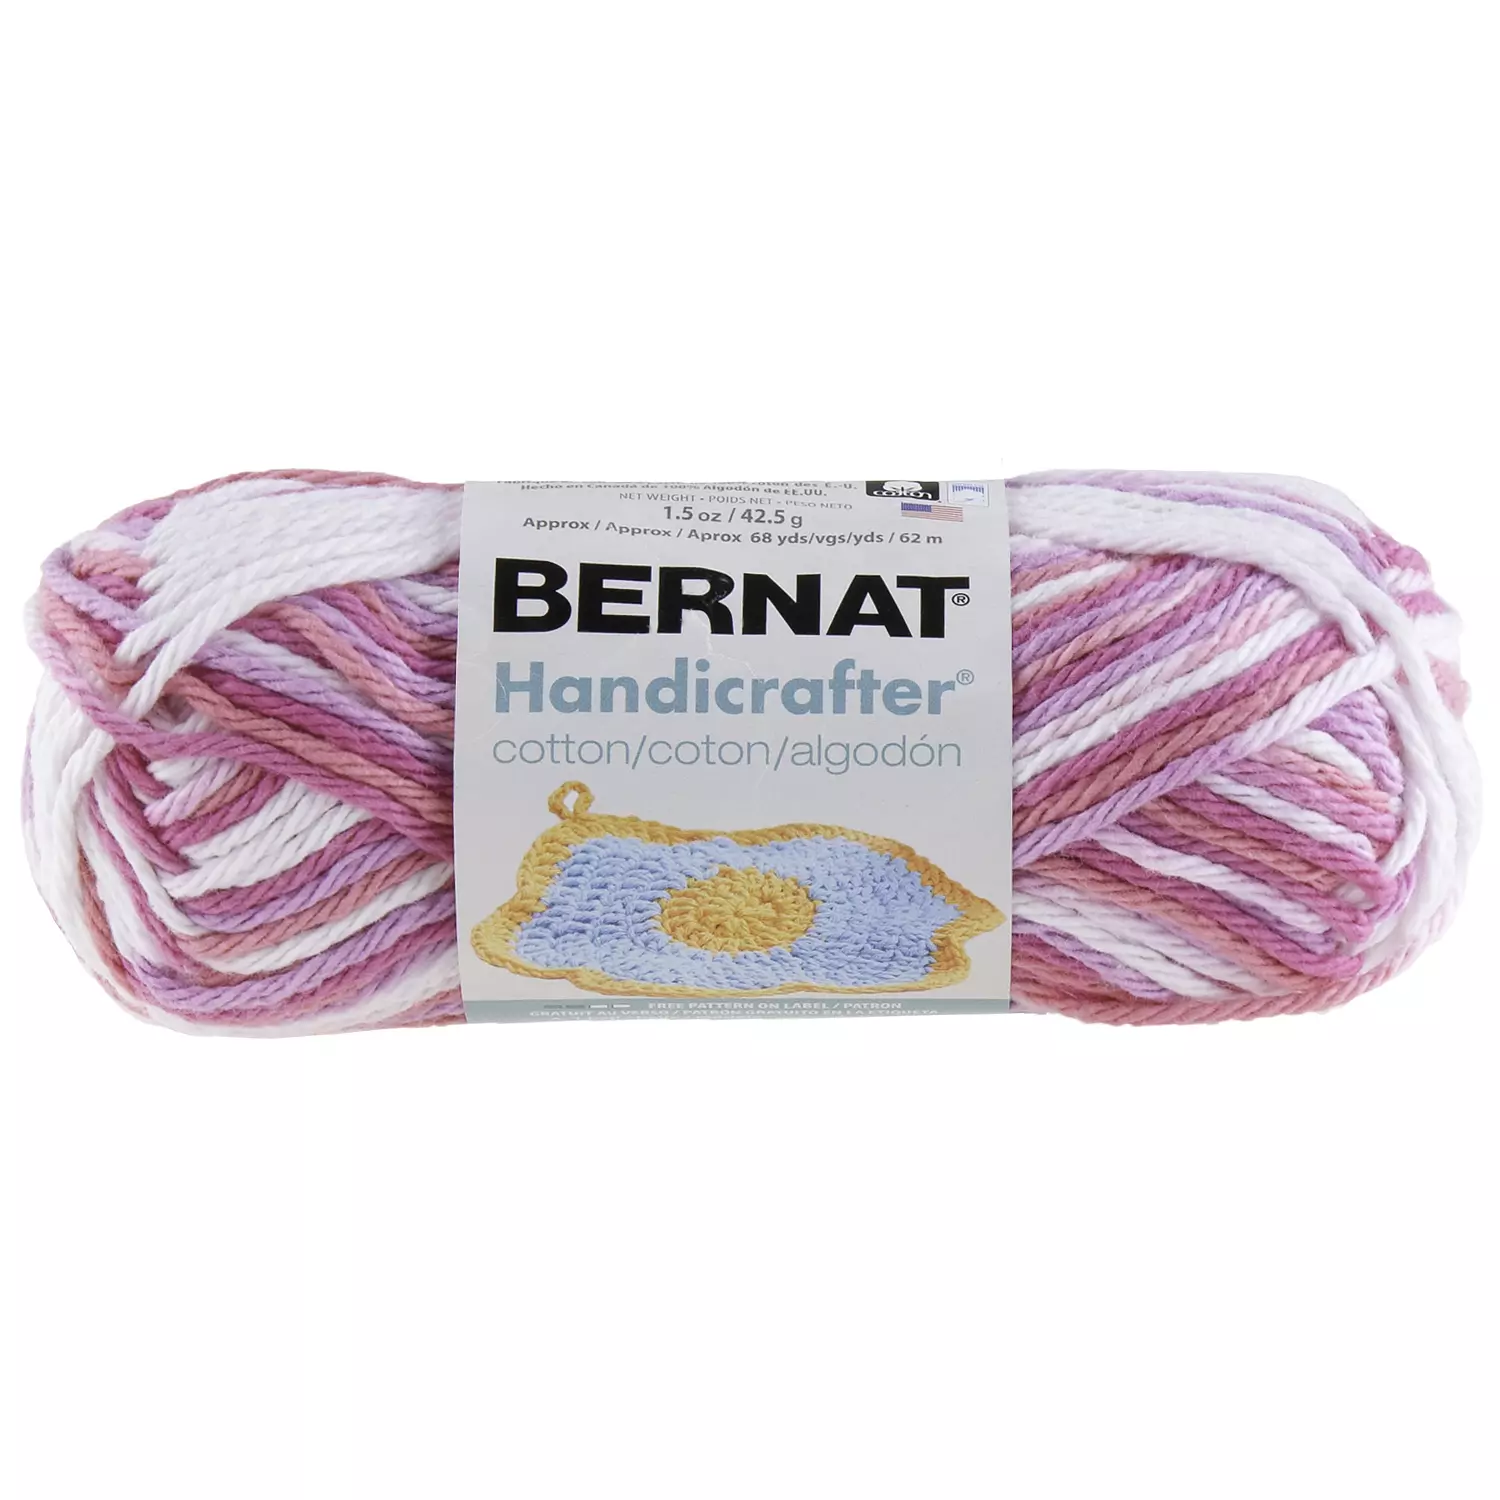 Bernat Handicrafter - Cotton yarn, patio pinks